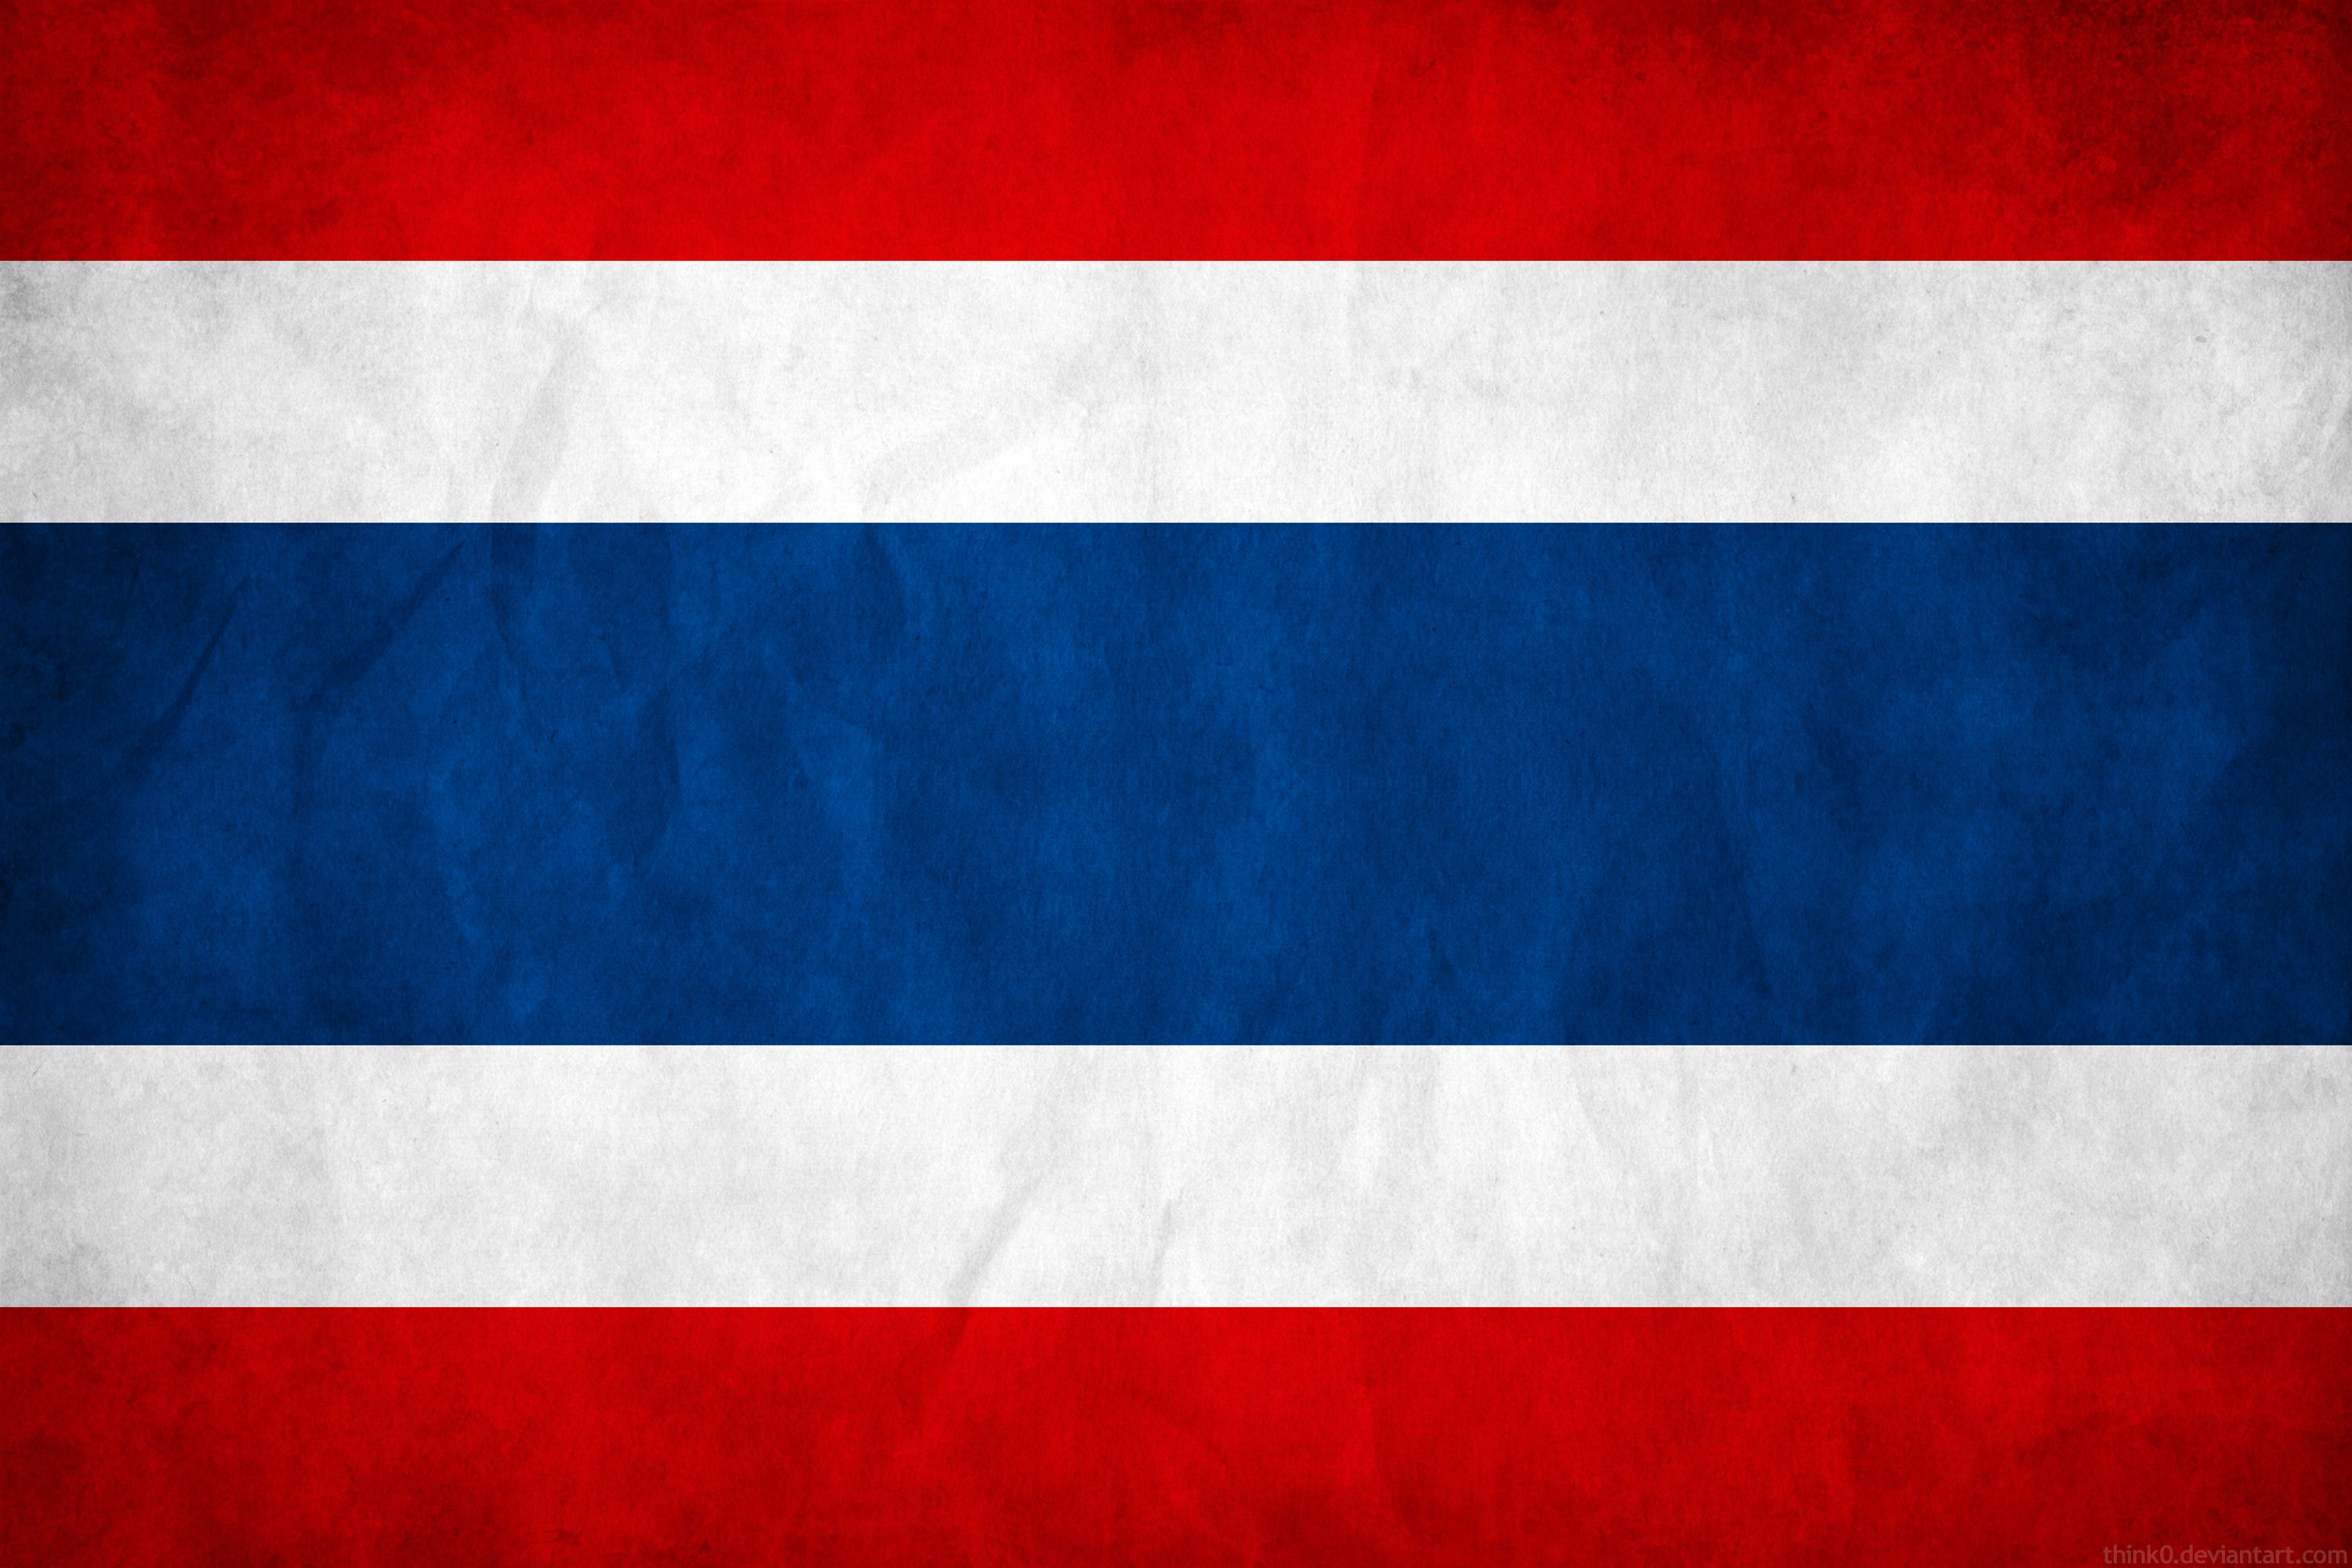 thailand flag - Google Search | Thailand | Pinterest | Thailand flag ...